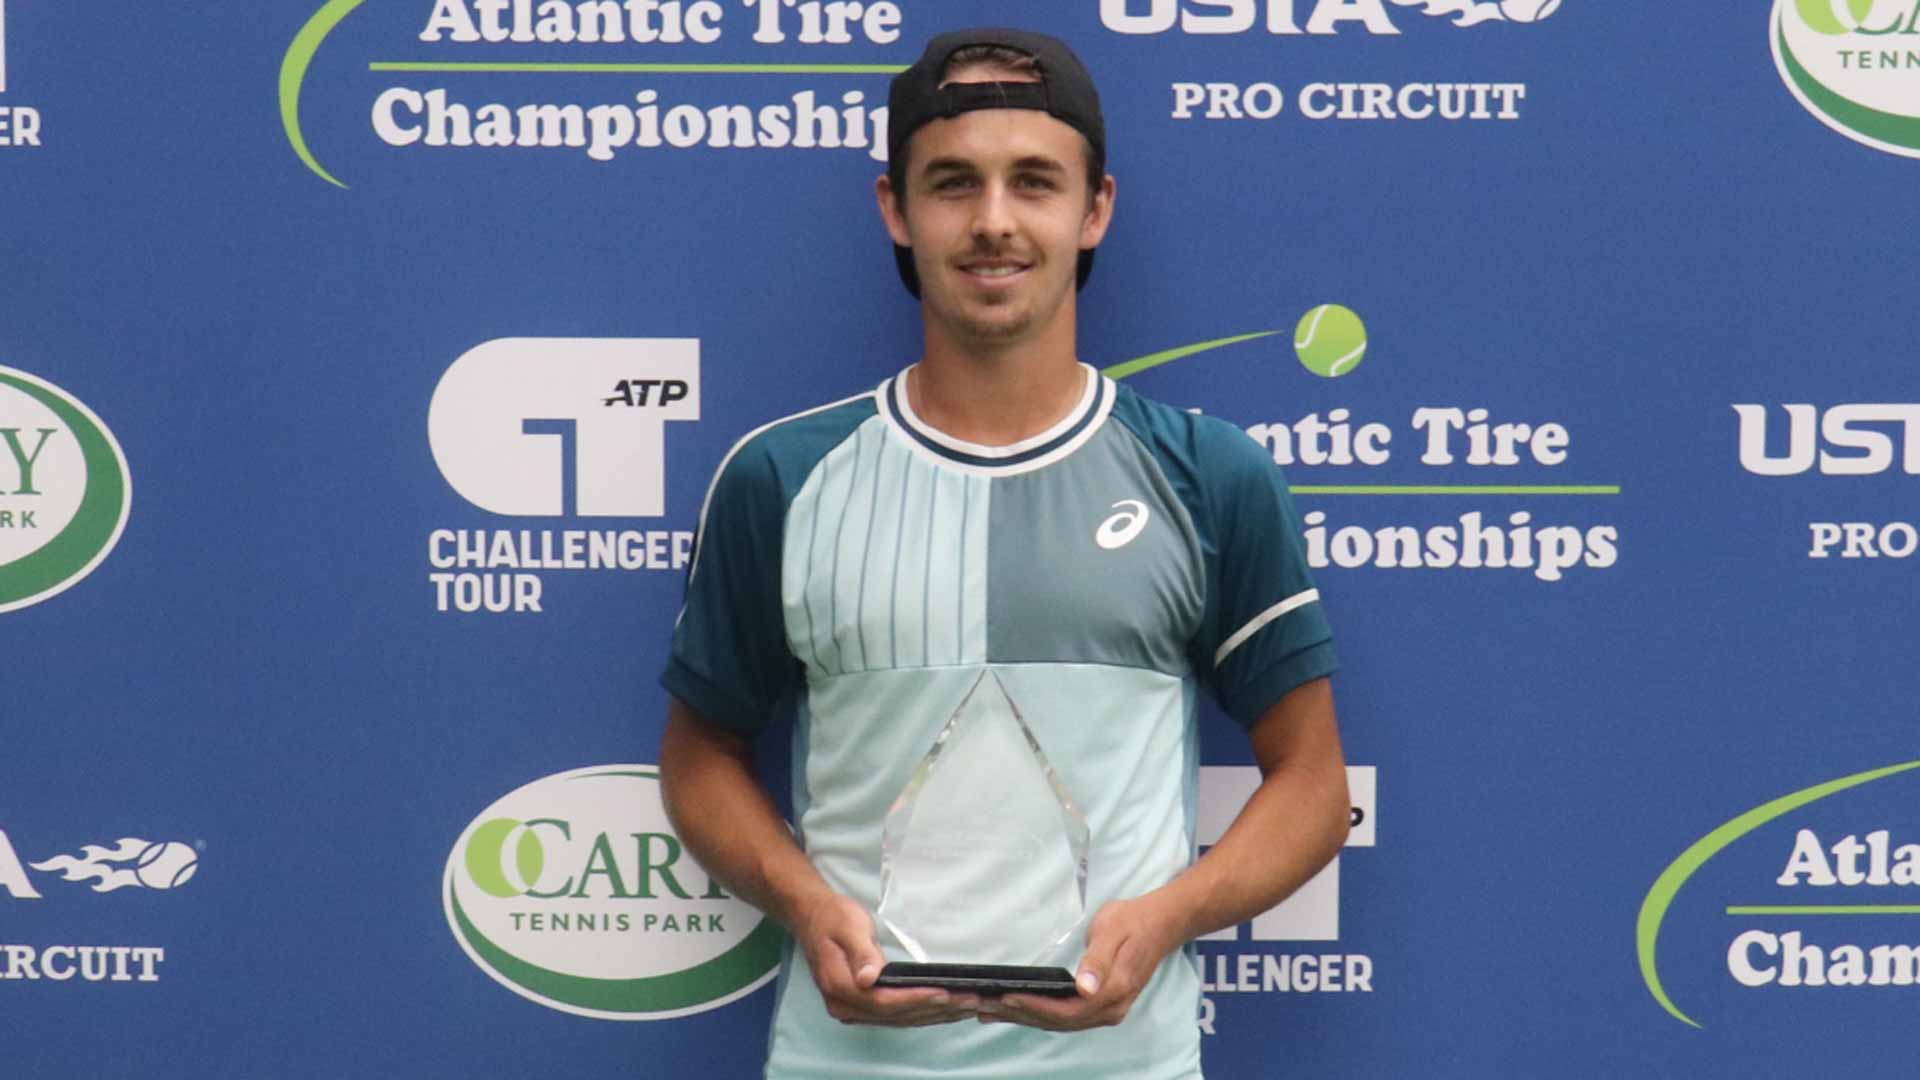 Zachary Svajda wins the Challenger 75 event in Cary, North Carolina.